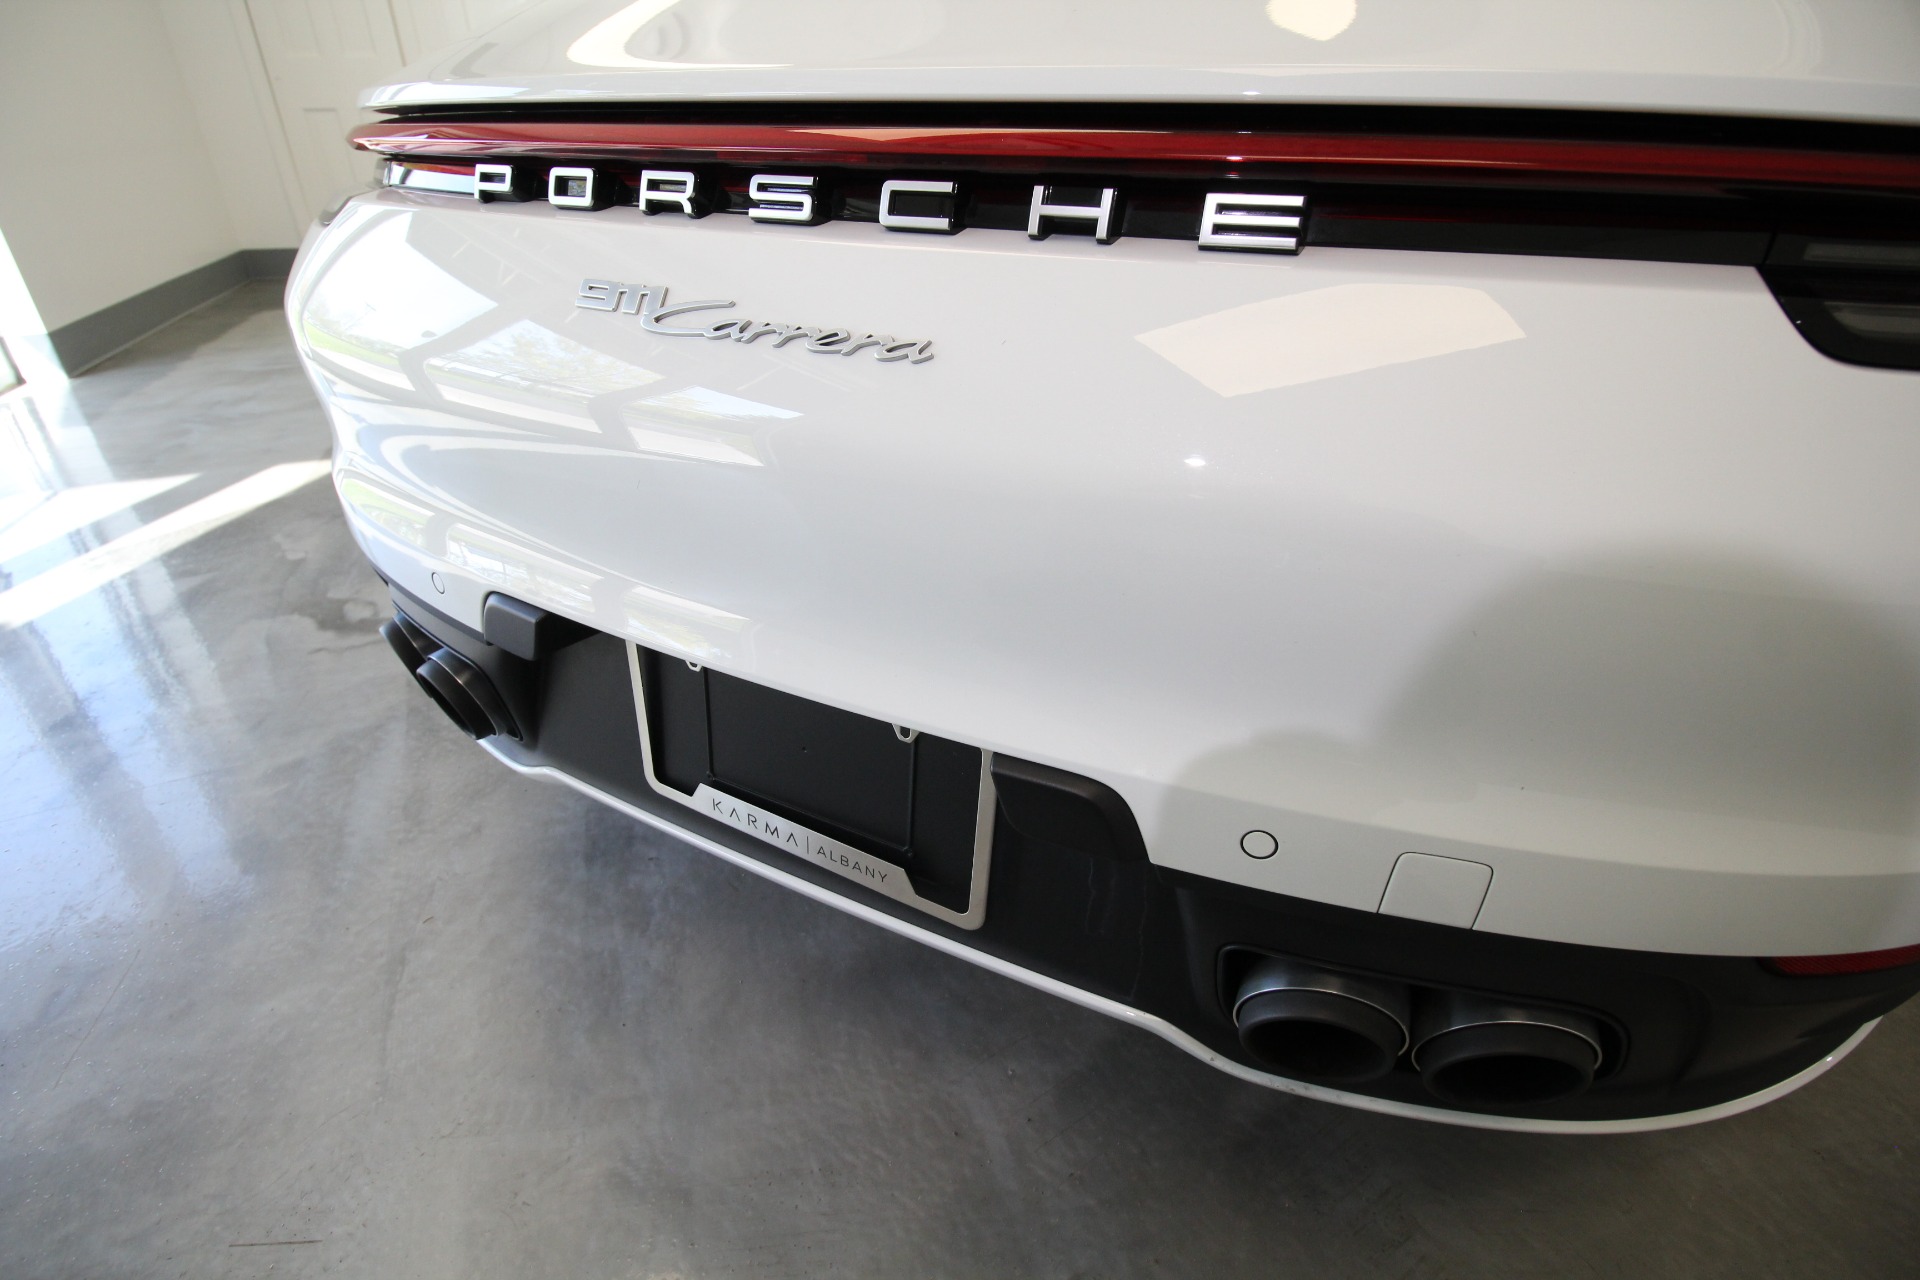 Used 2021 WHITE Porsche 911 CARERRA COUPE LIKE NEW STUNNING | Albany, NY